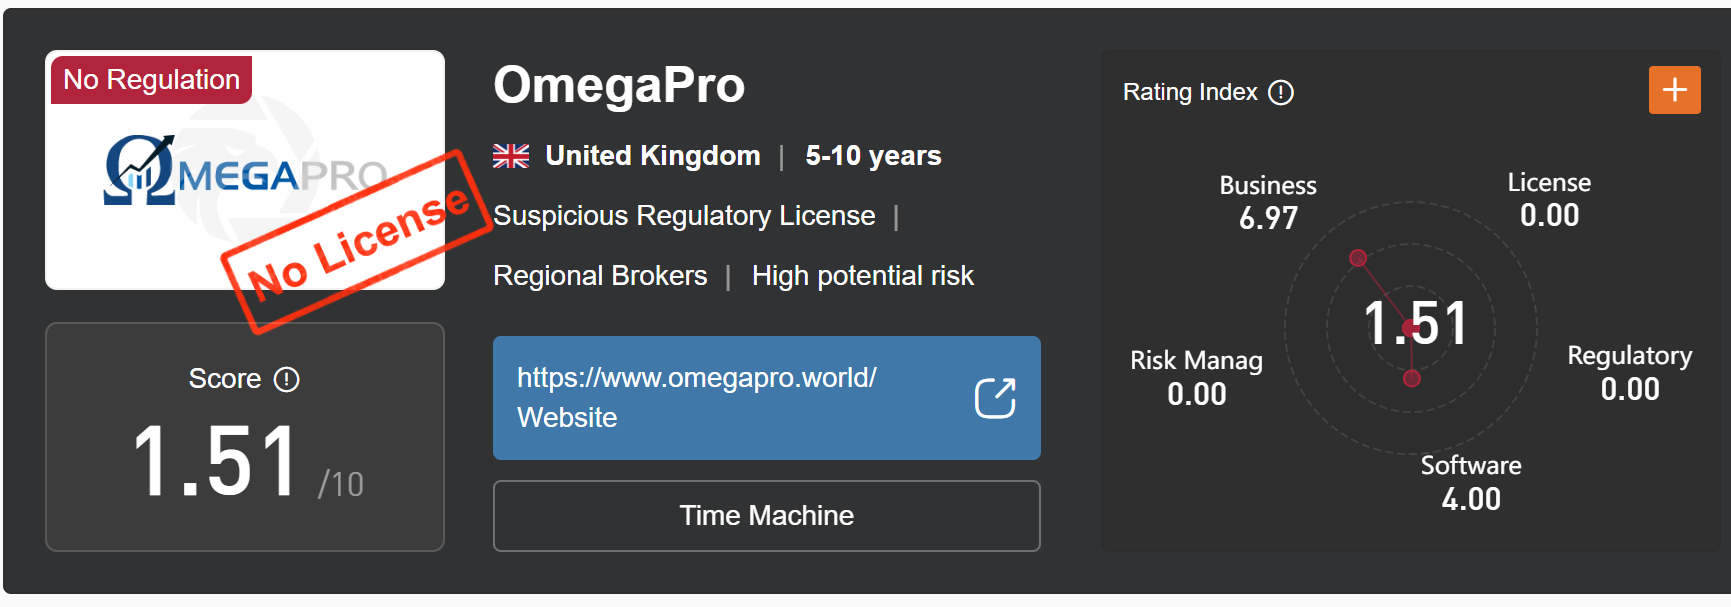 omeapro-regulation  